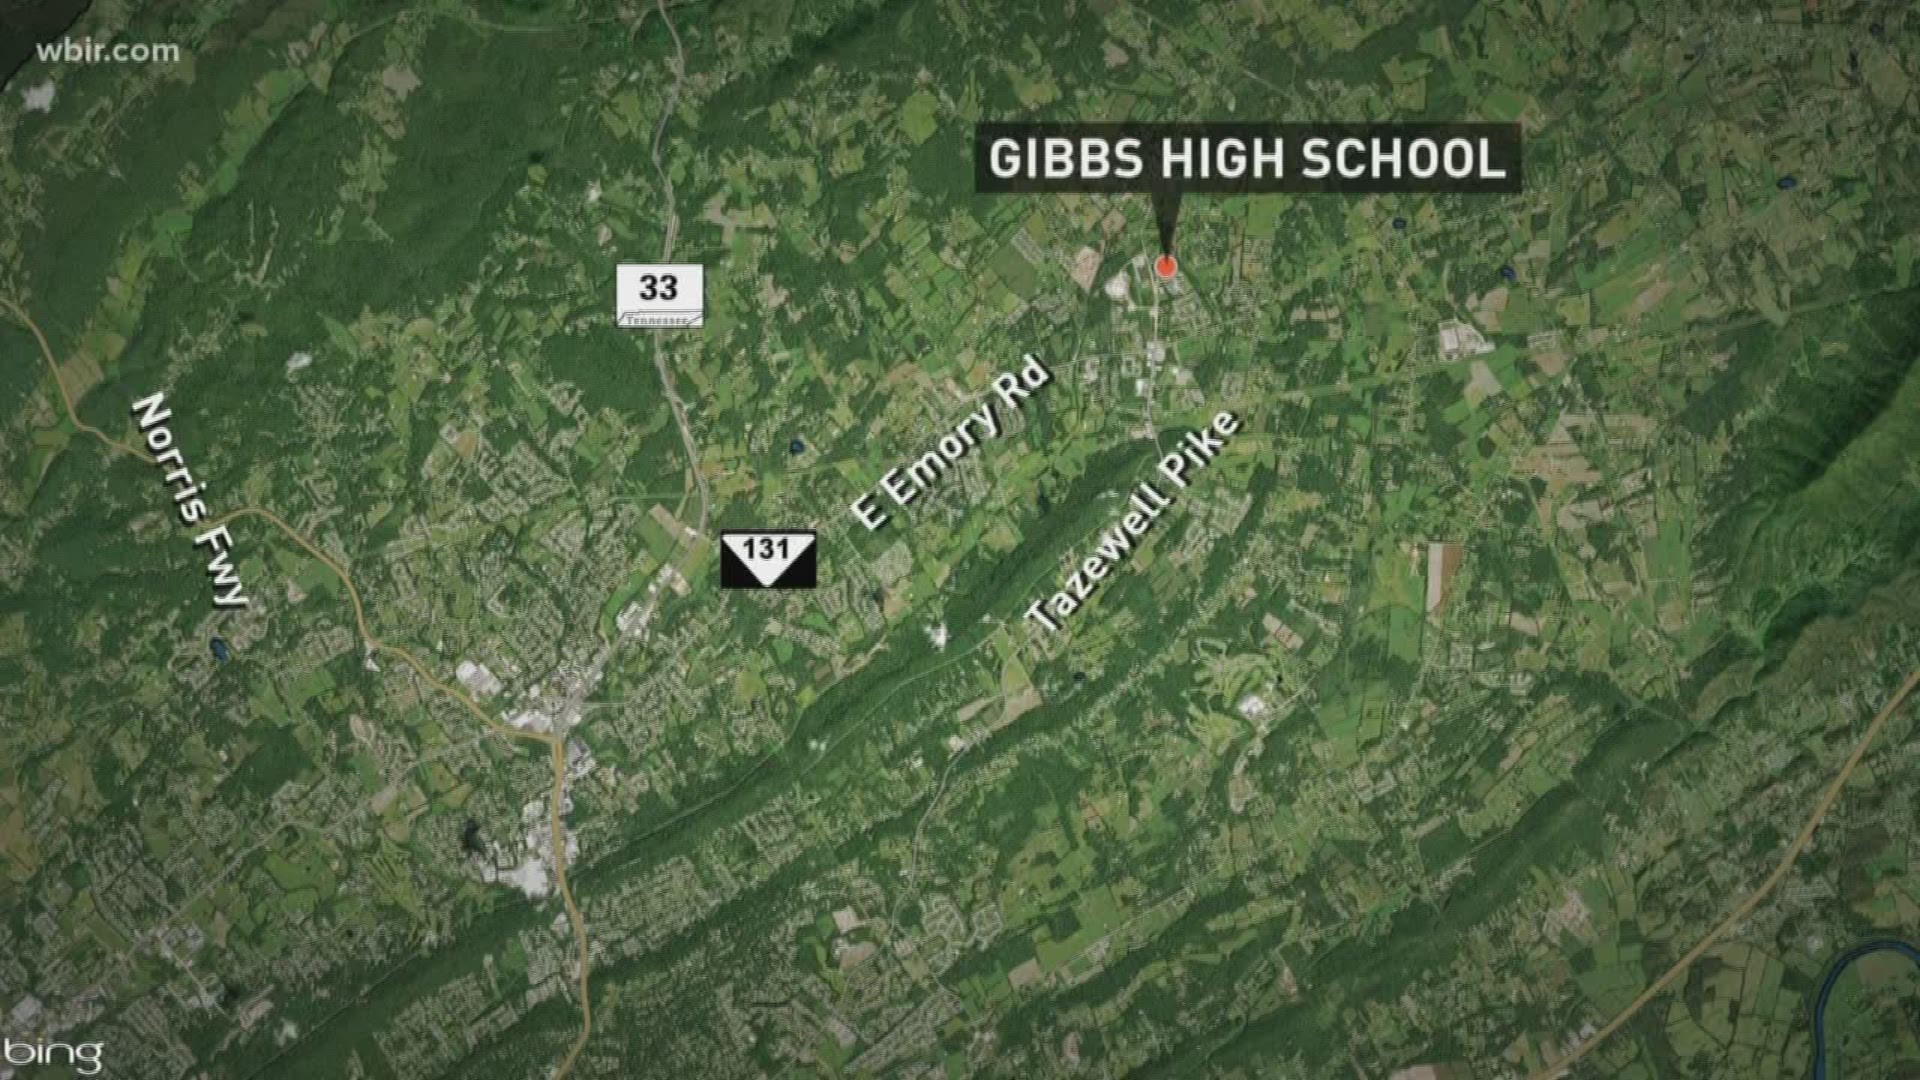 All three Gibbs school went on a soft lockdown after someone threatened Gibbs High School on social media.